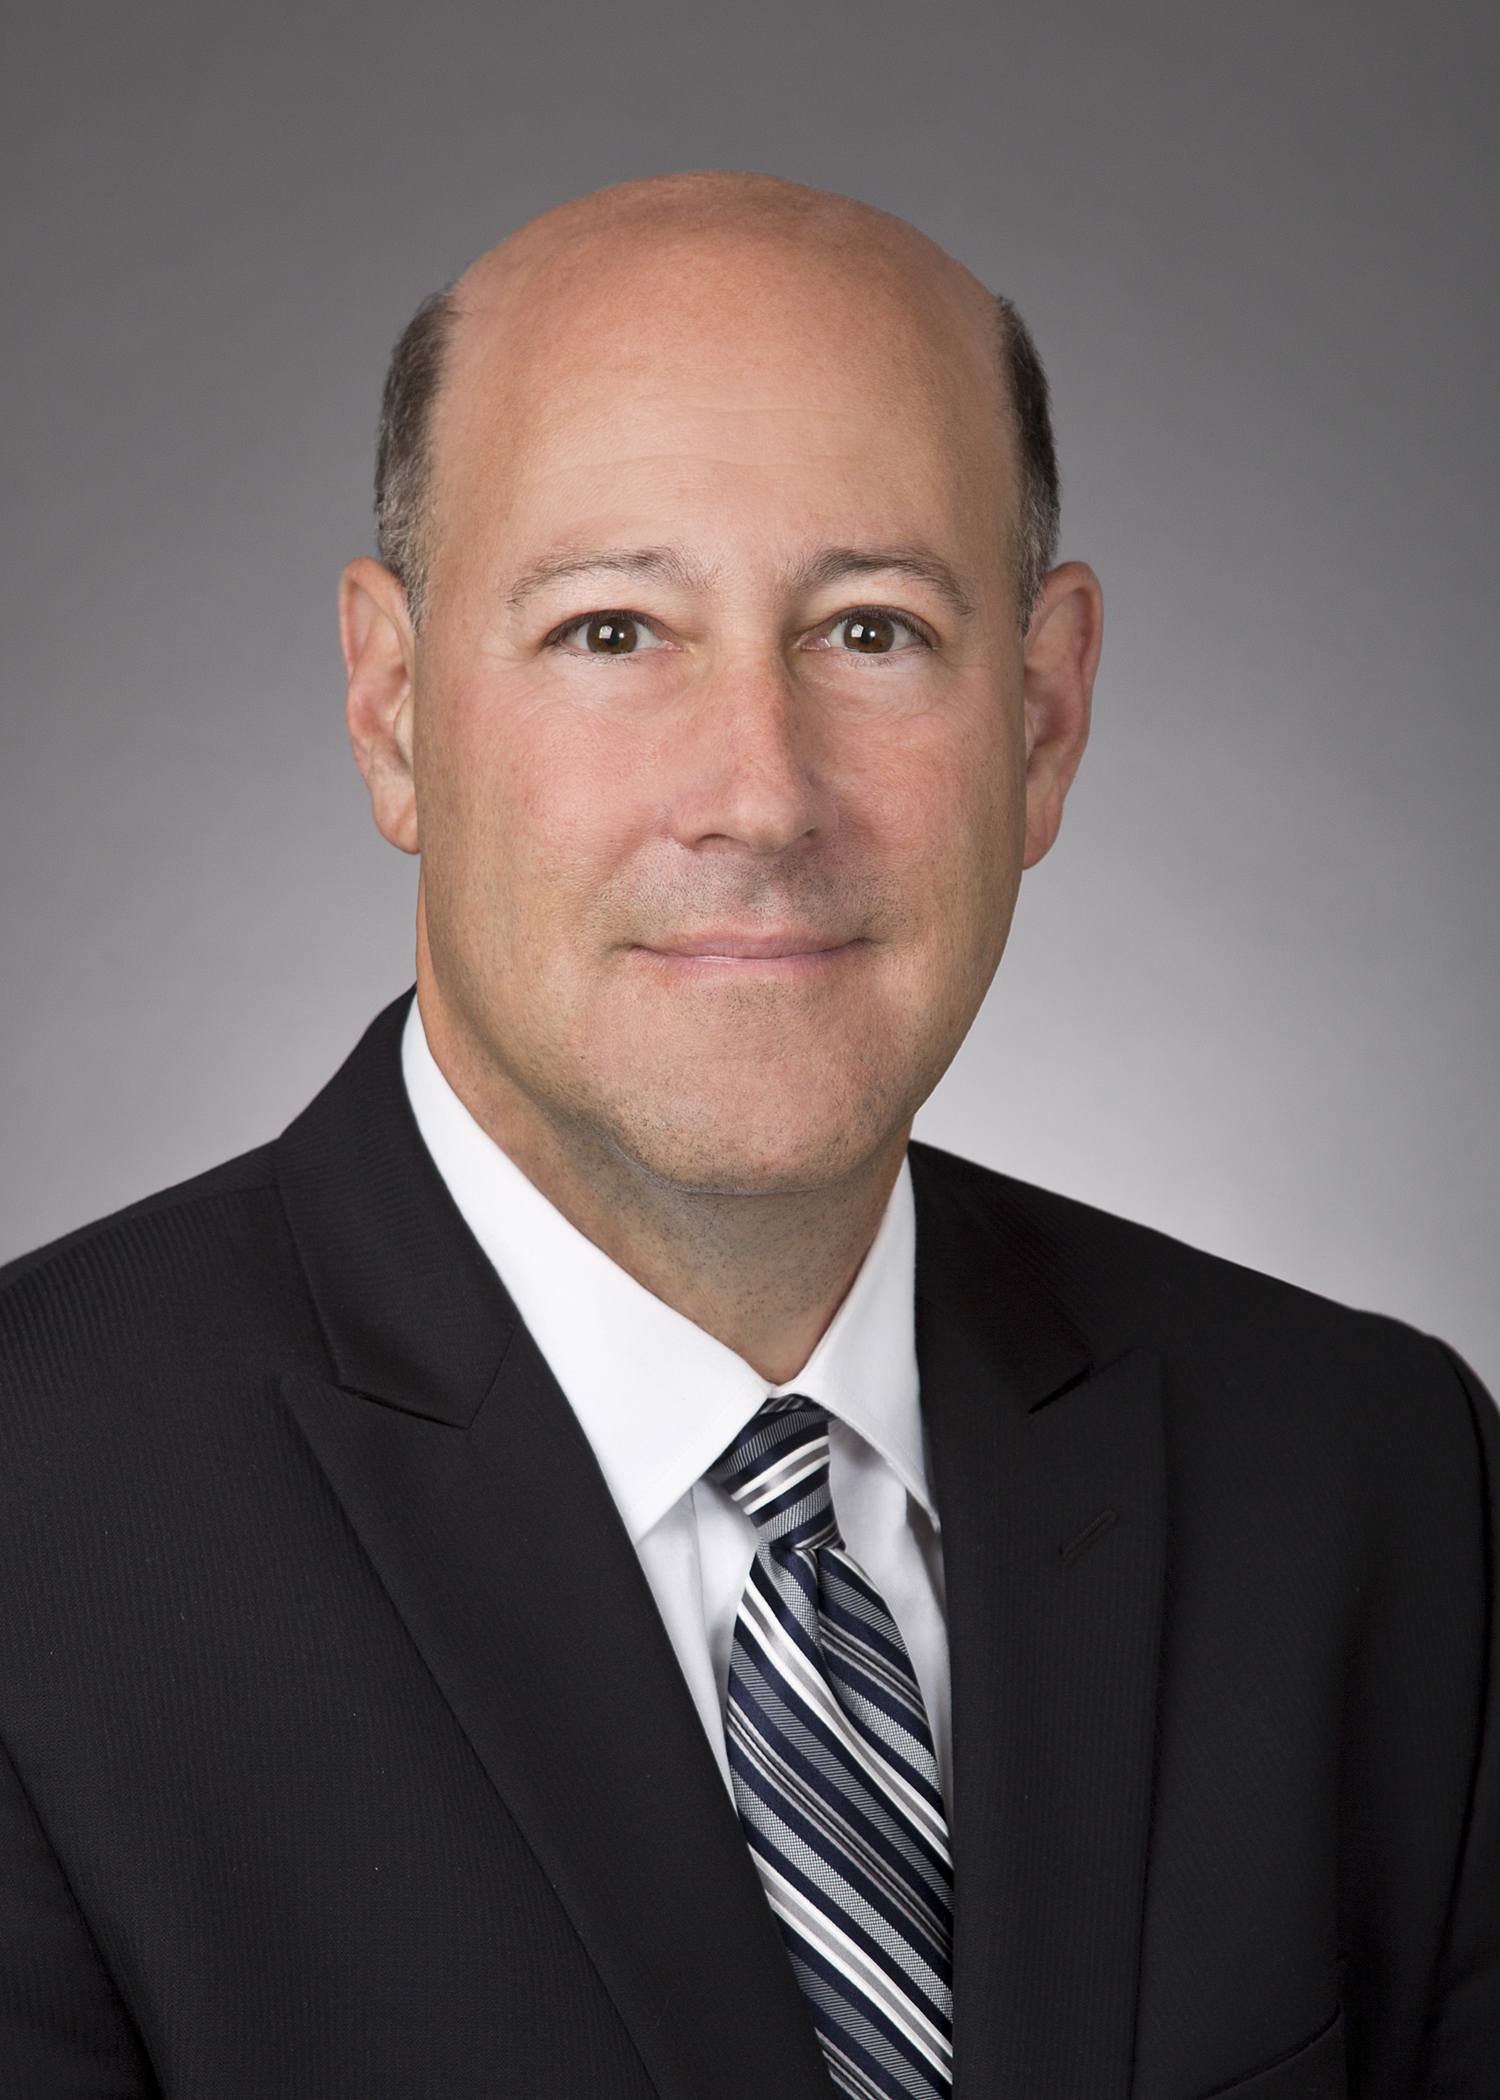 David Berenbaum Named Chief Executive Officer of Homeownership